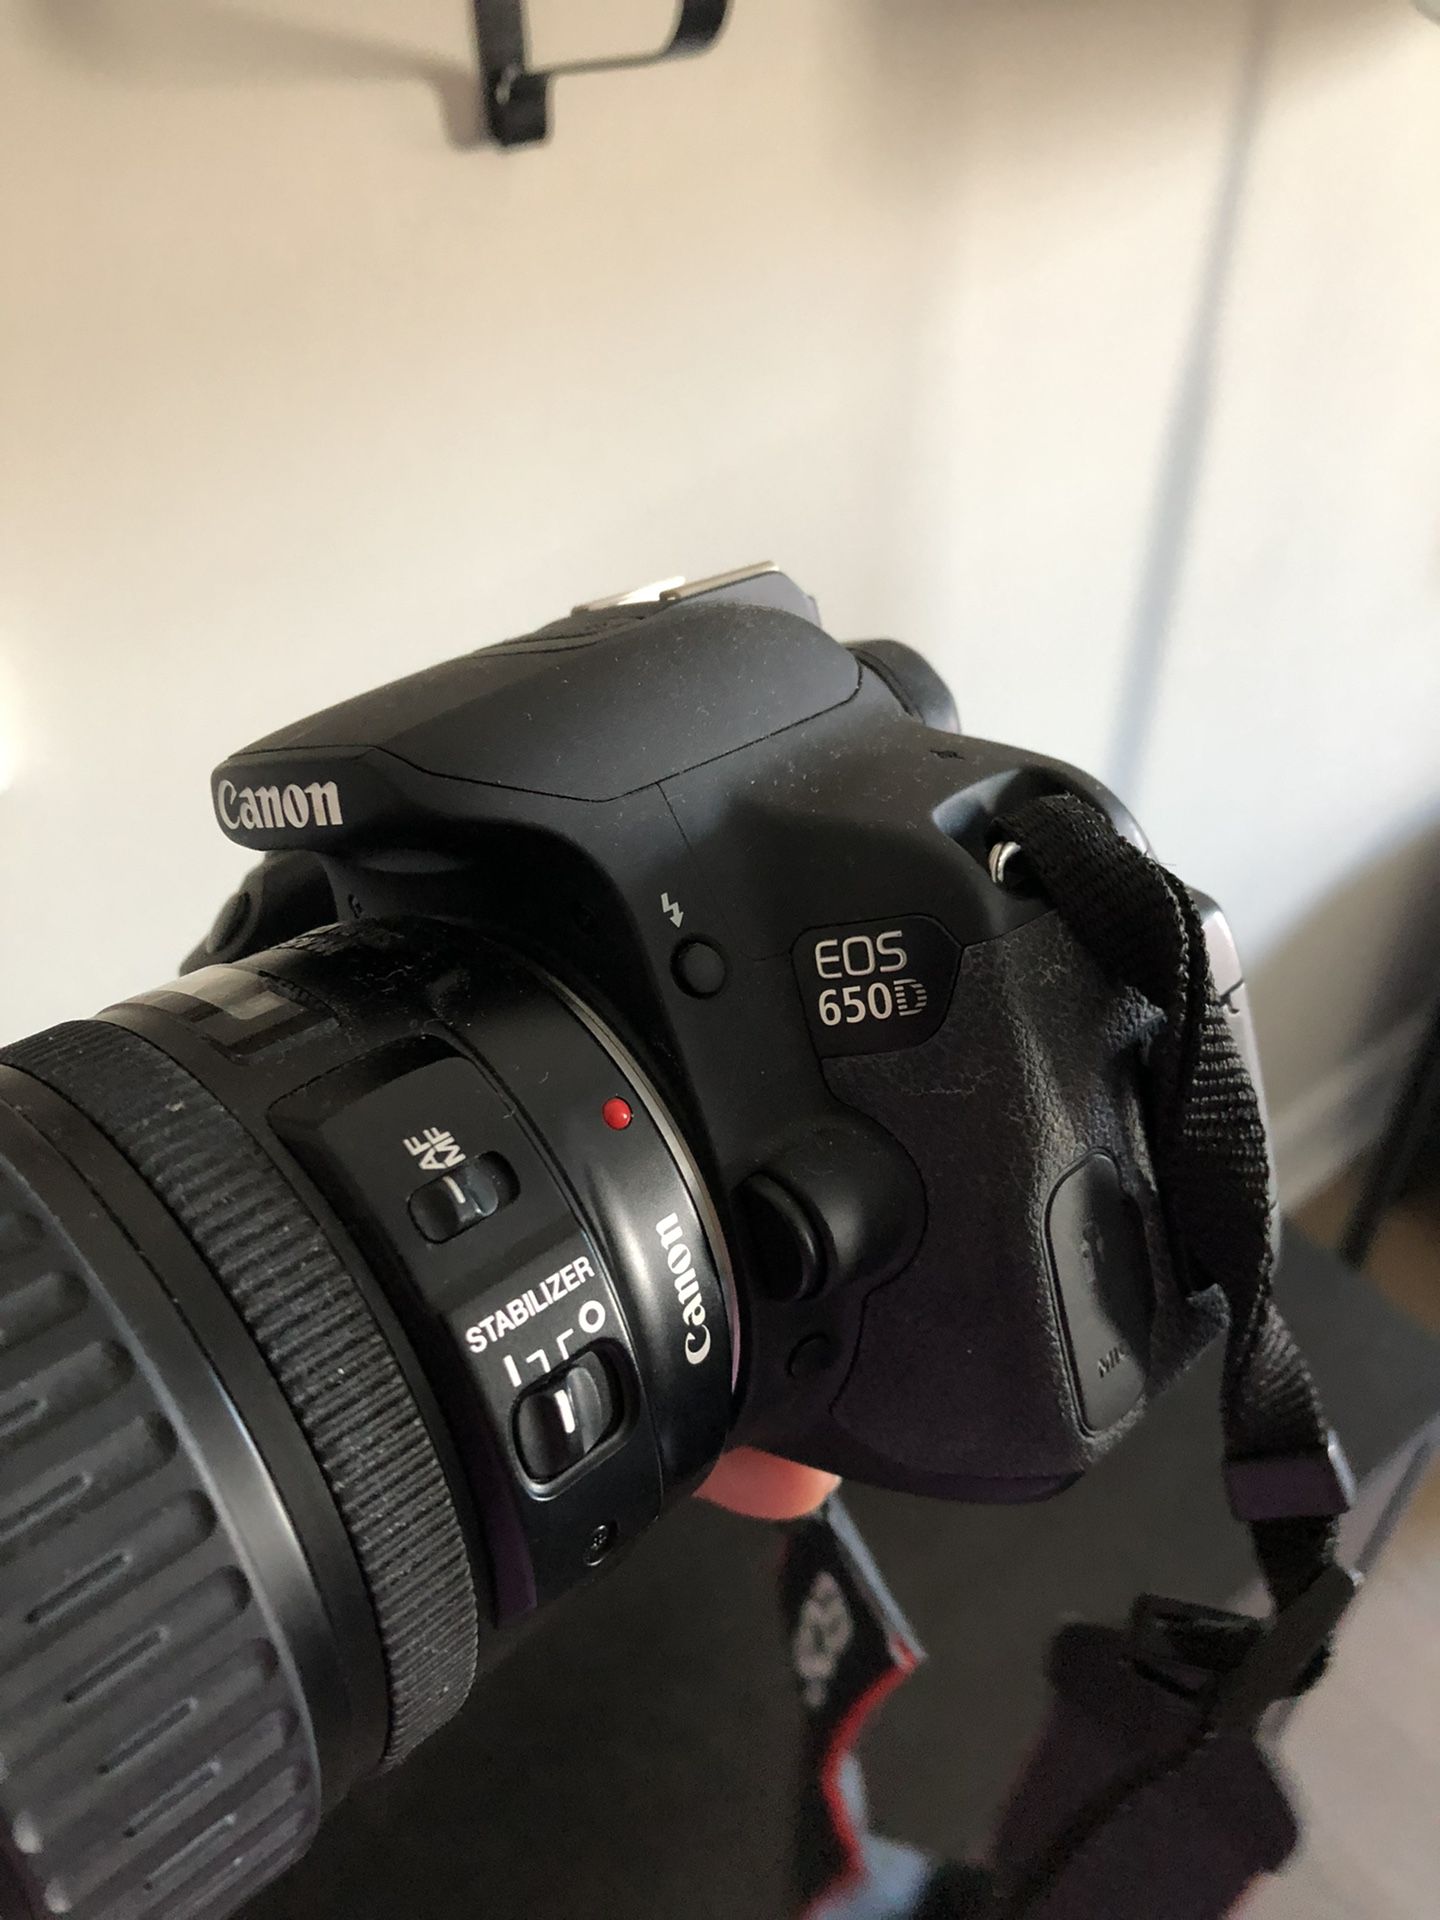 Canon EOS 650D (Rebel T4i)